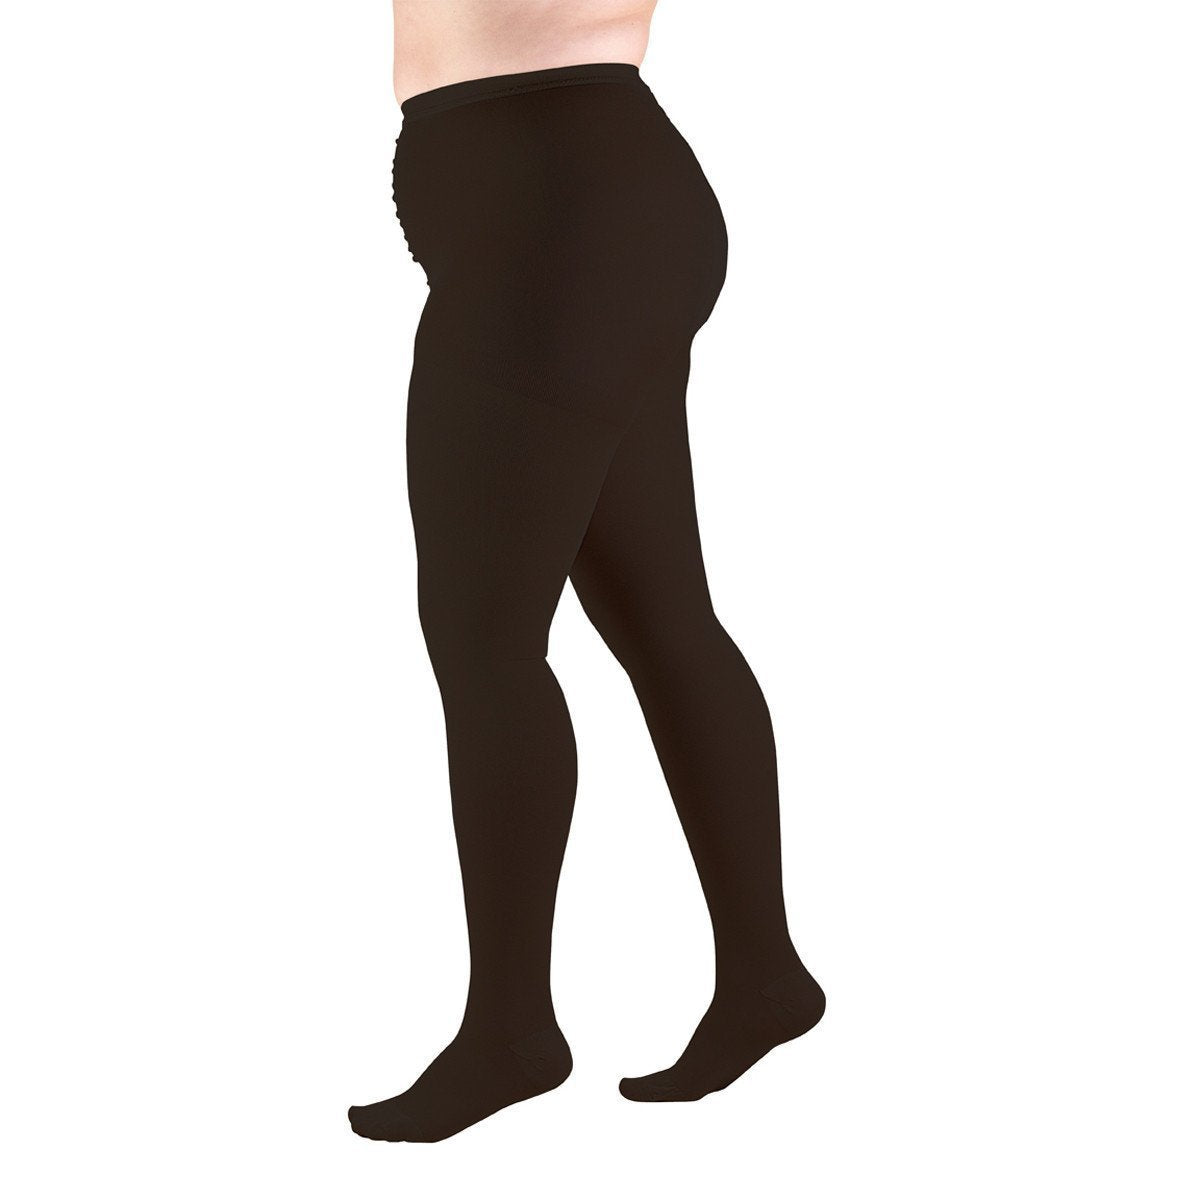 30-40 mmHg Compression Pantyhose Women Men Stockings India